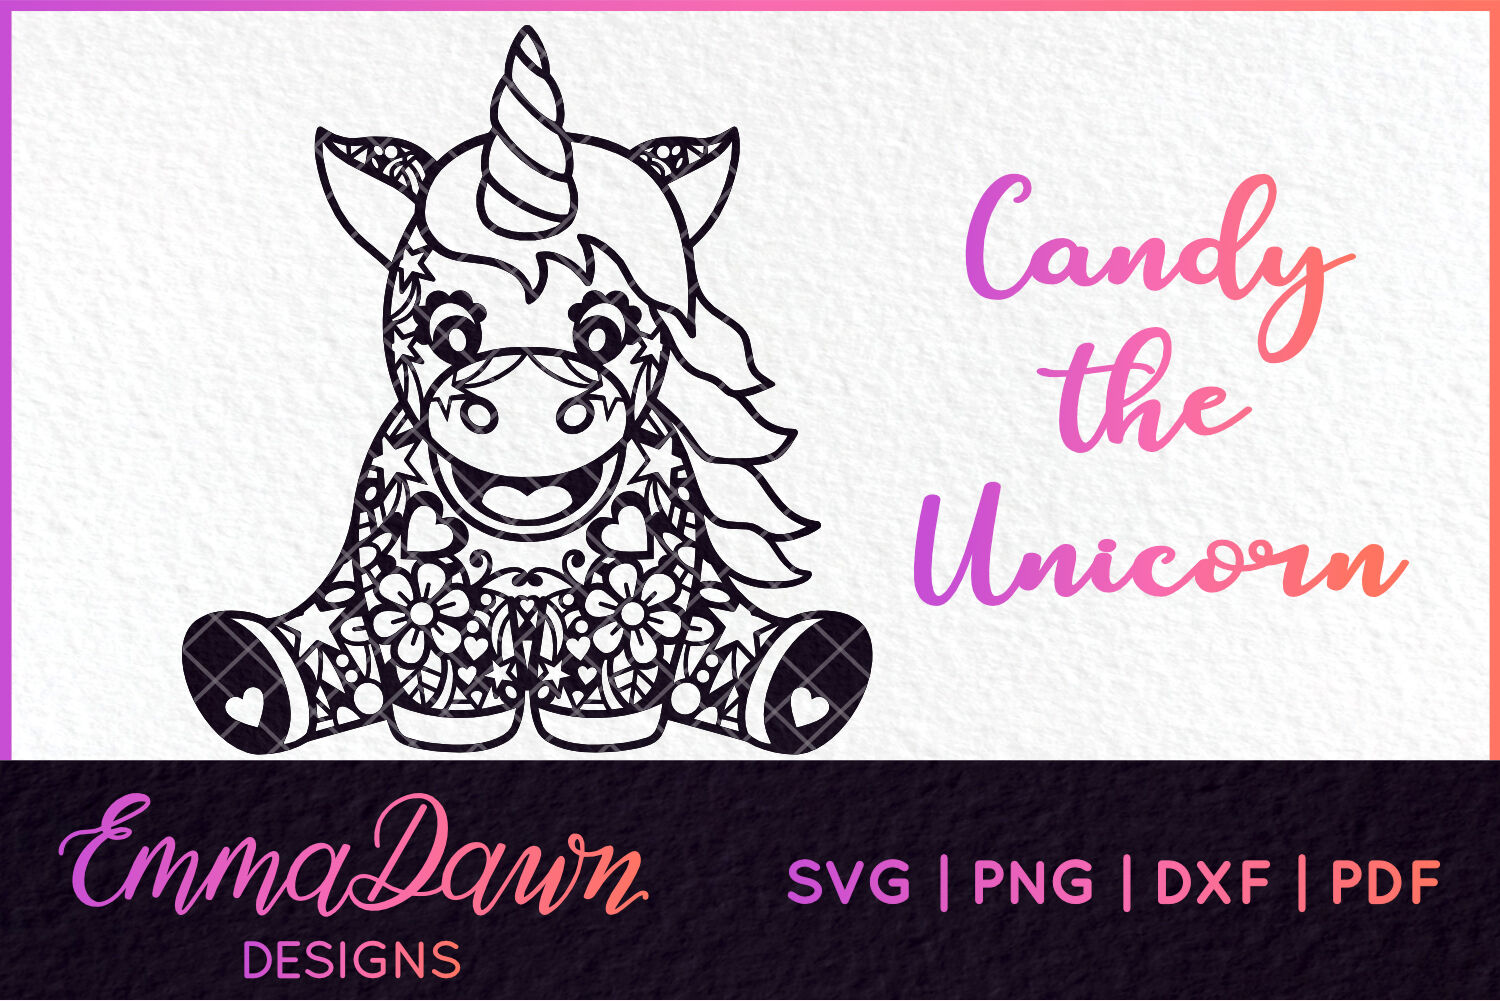 Download Candy The Unicorn Mandala Zentangle Design Svg By Emma Dawn Designs Thehungryjpeg Com